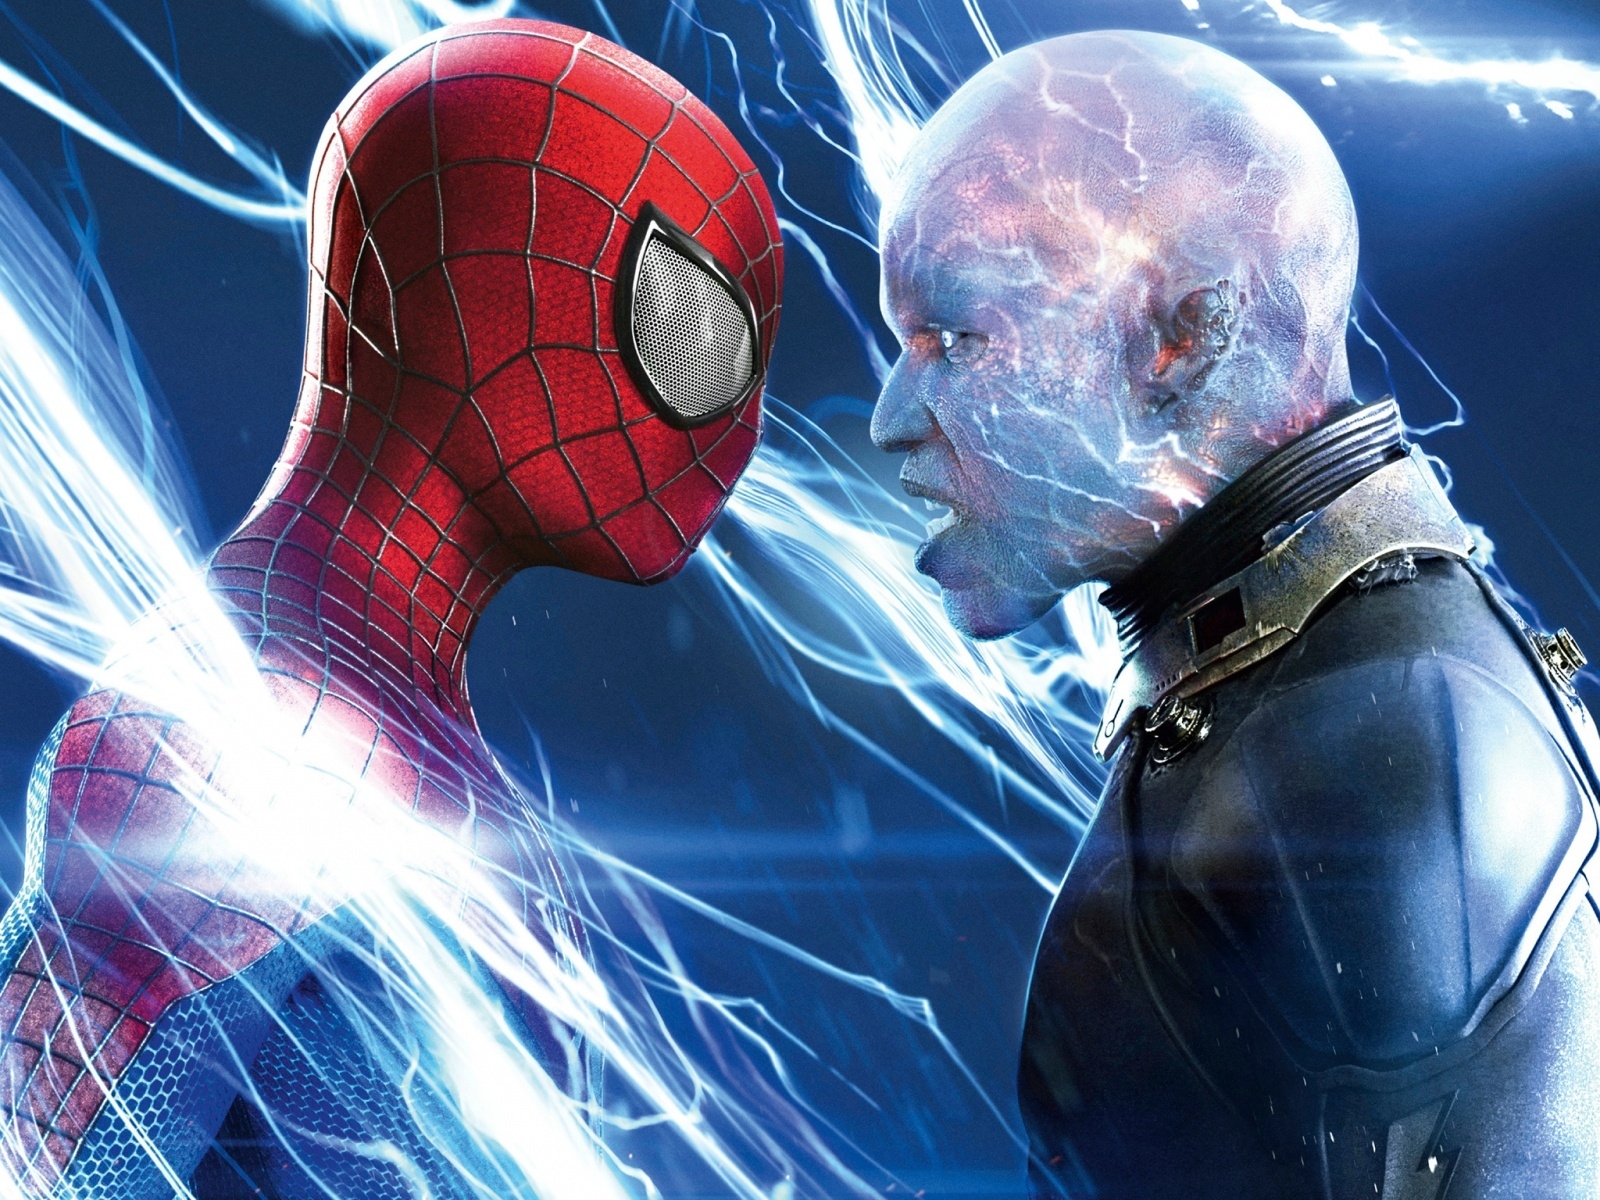 Spiderman vs Electro for 1600 x 1200 resolution